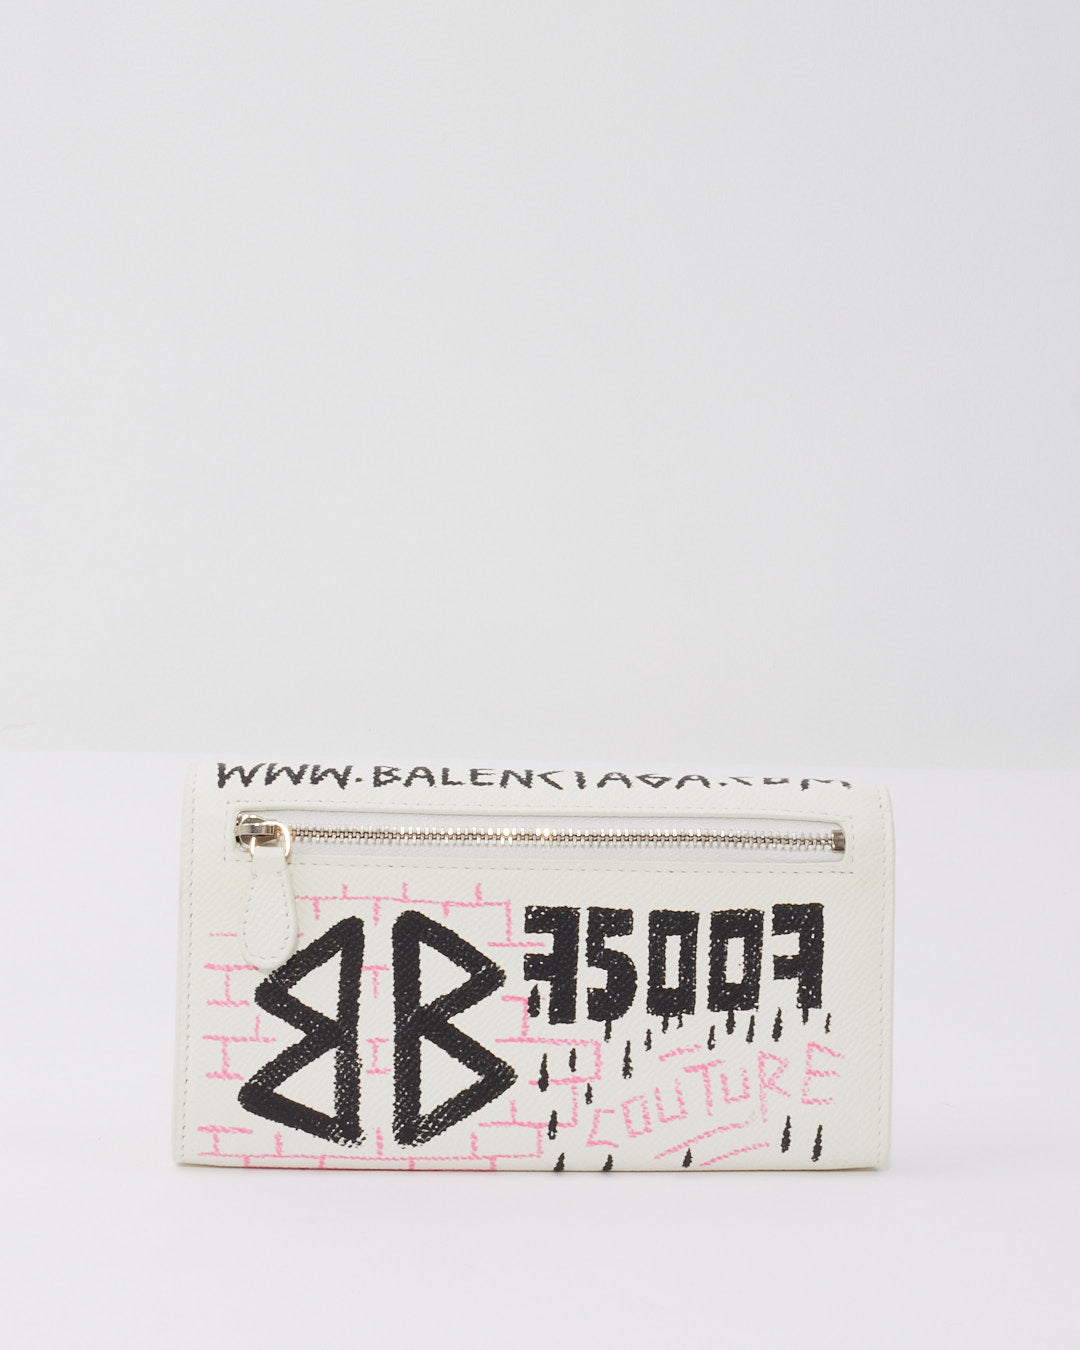 Balenciaga Portefeuille Graffit blanc/rose sur chaîne